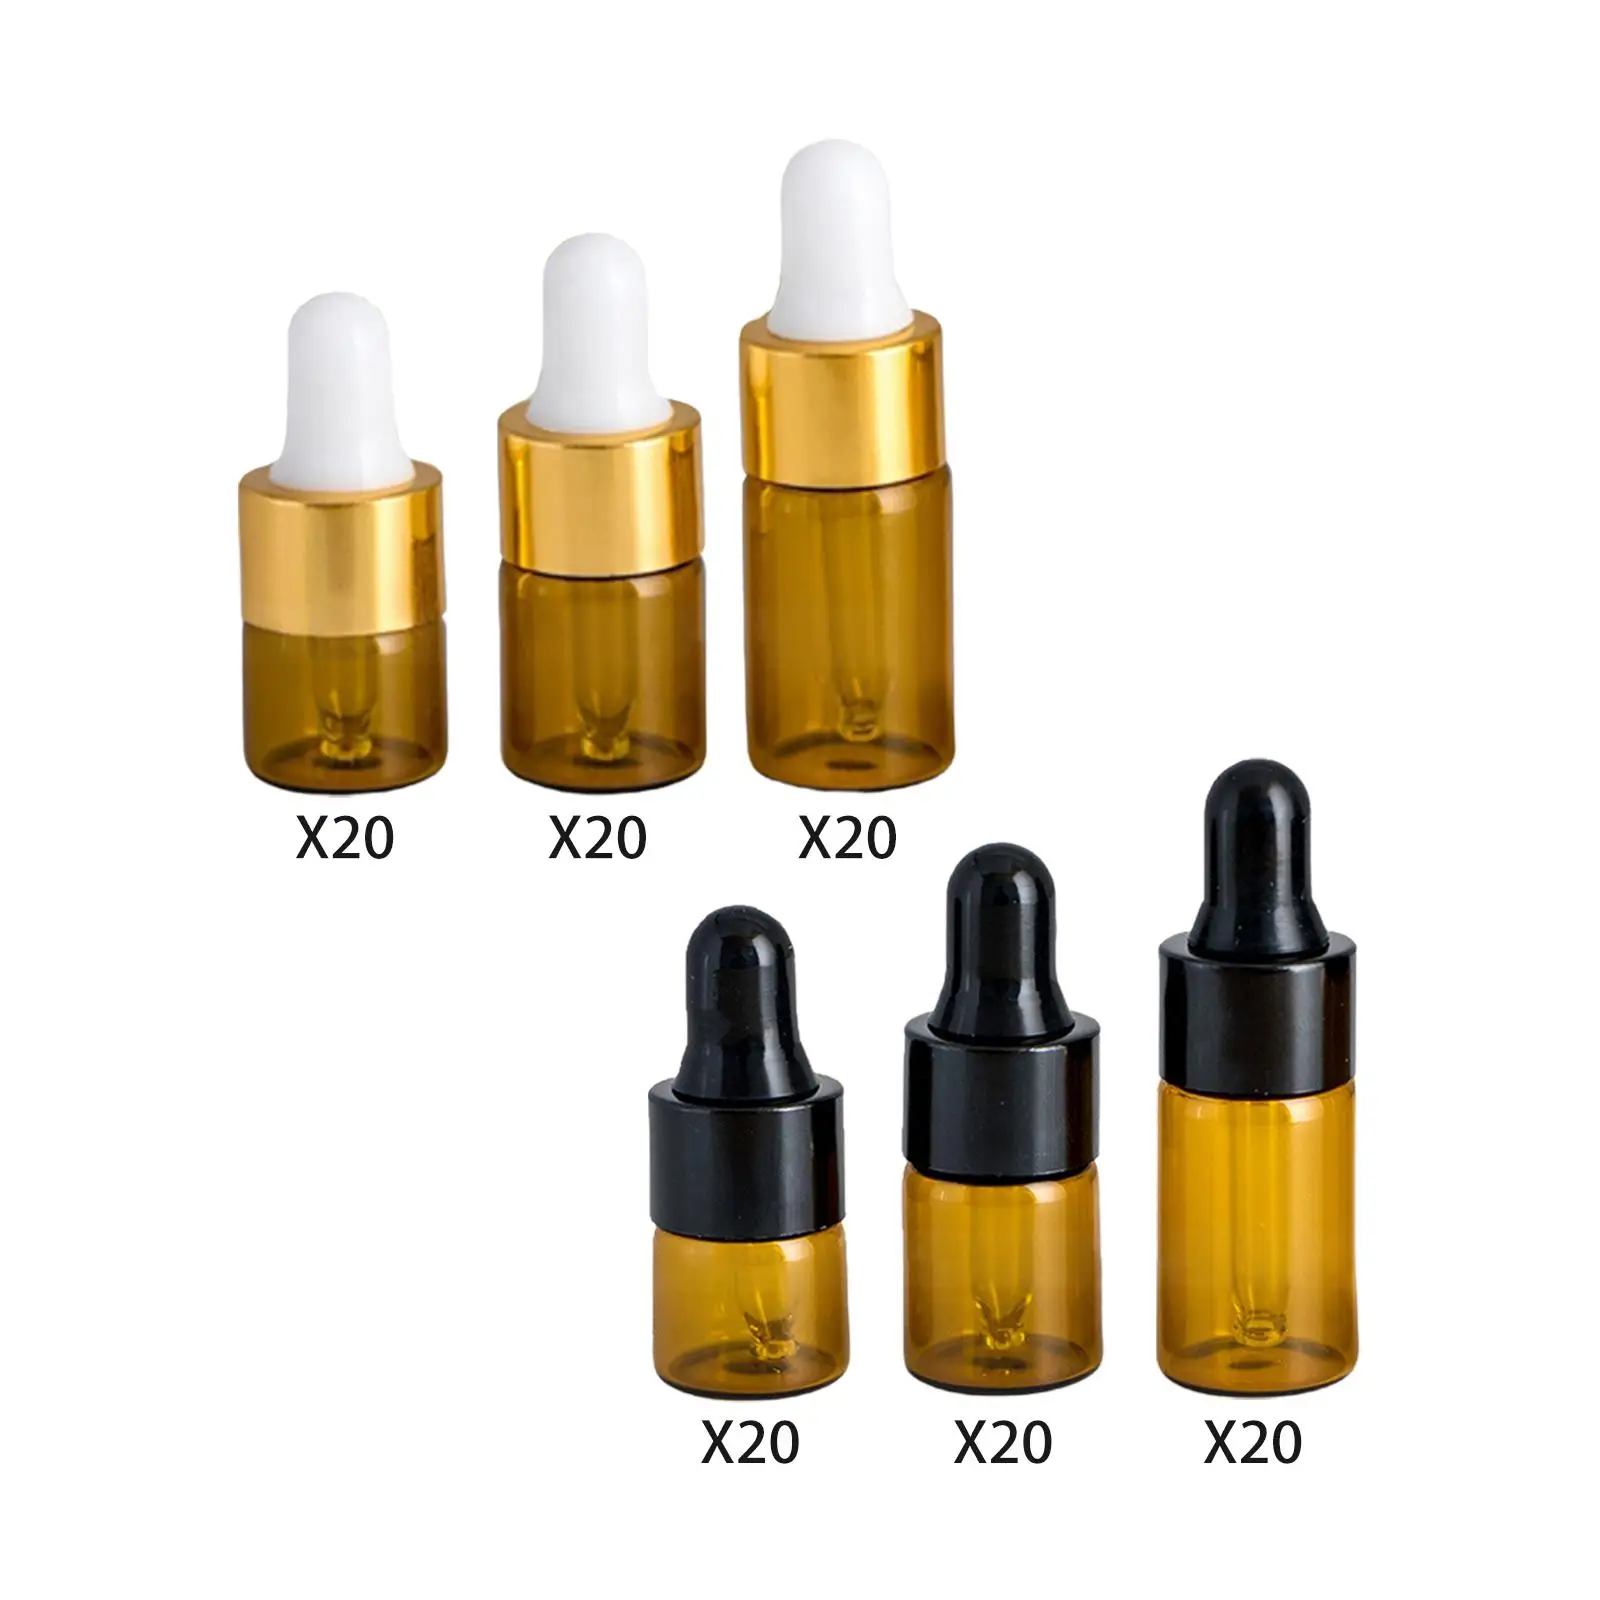 Mini Dropper Bottles with Glass Eye Dropper Refillable Sample Vial Empty Essential Oil Bottle for Essential Oils Body Oils